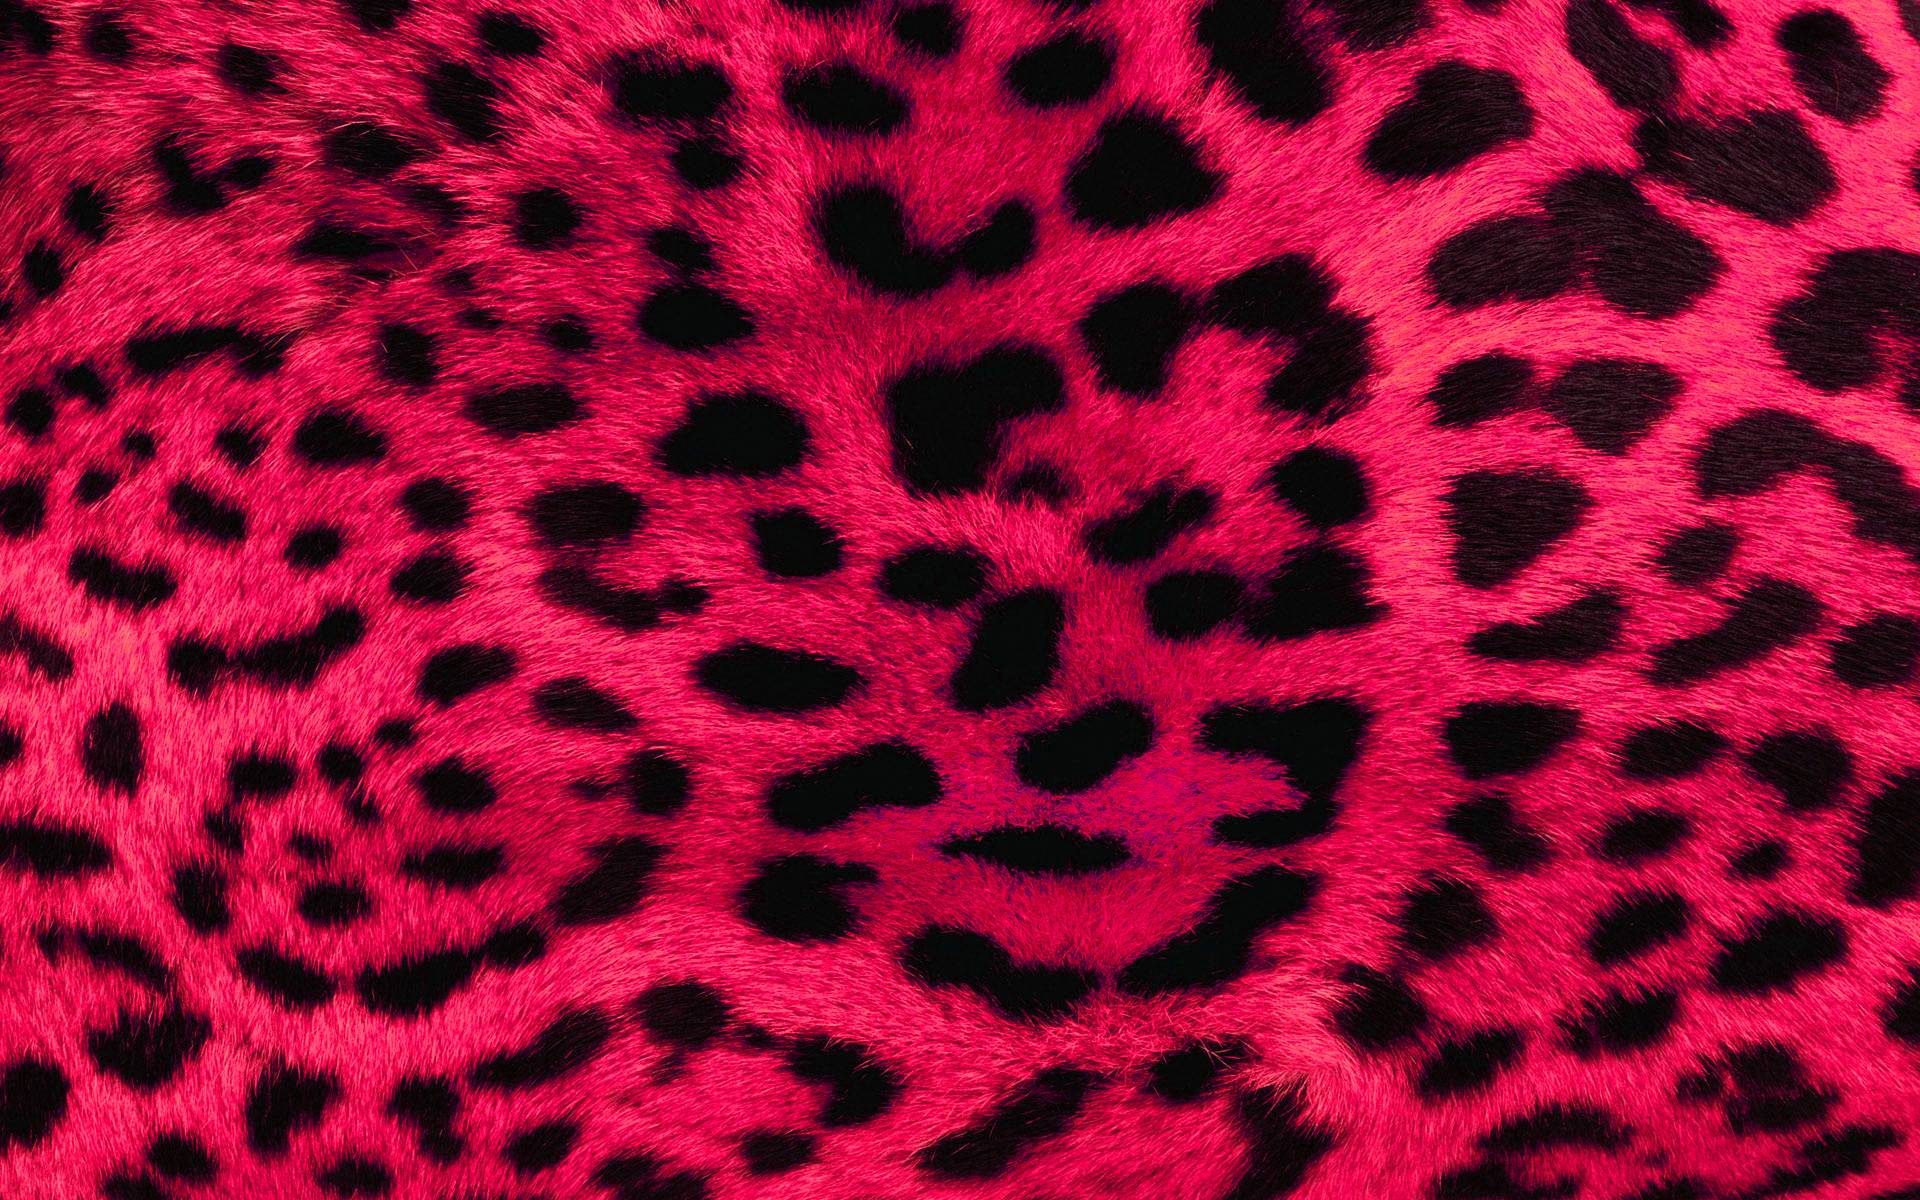 Cheetah Print HD Wallpaper and Background